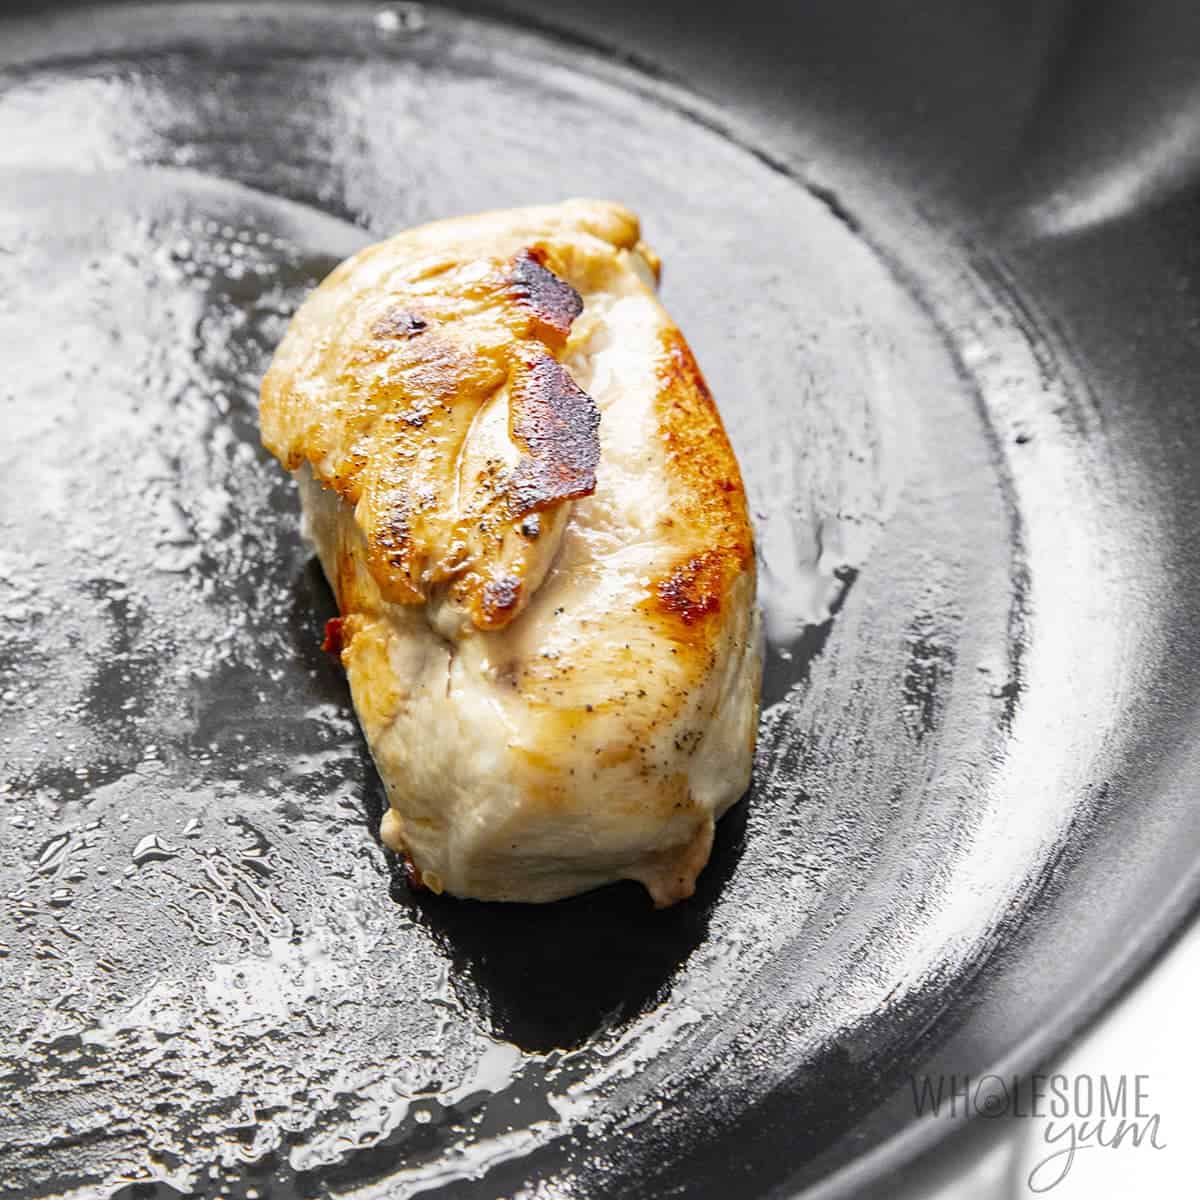 Cooking chicken breast in skillet